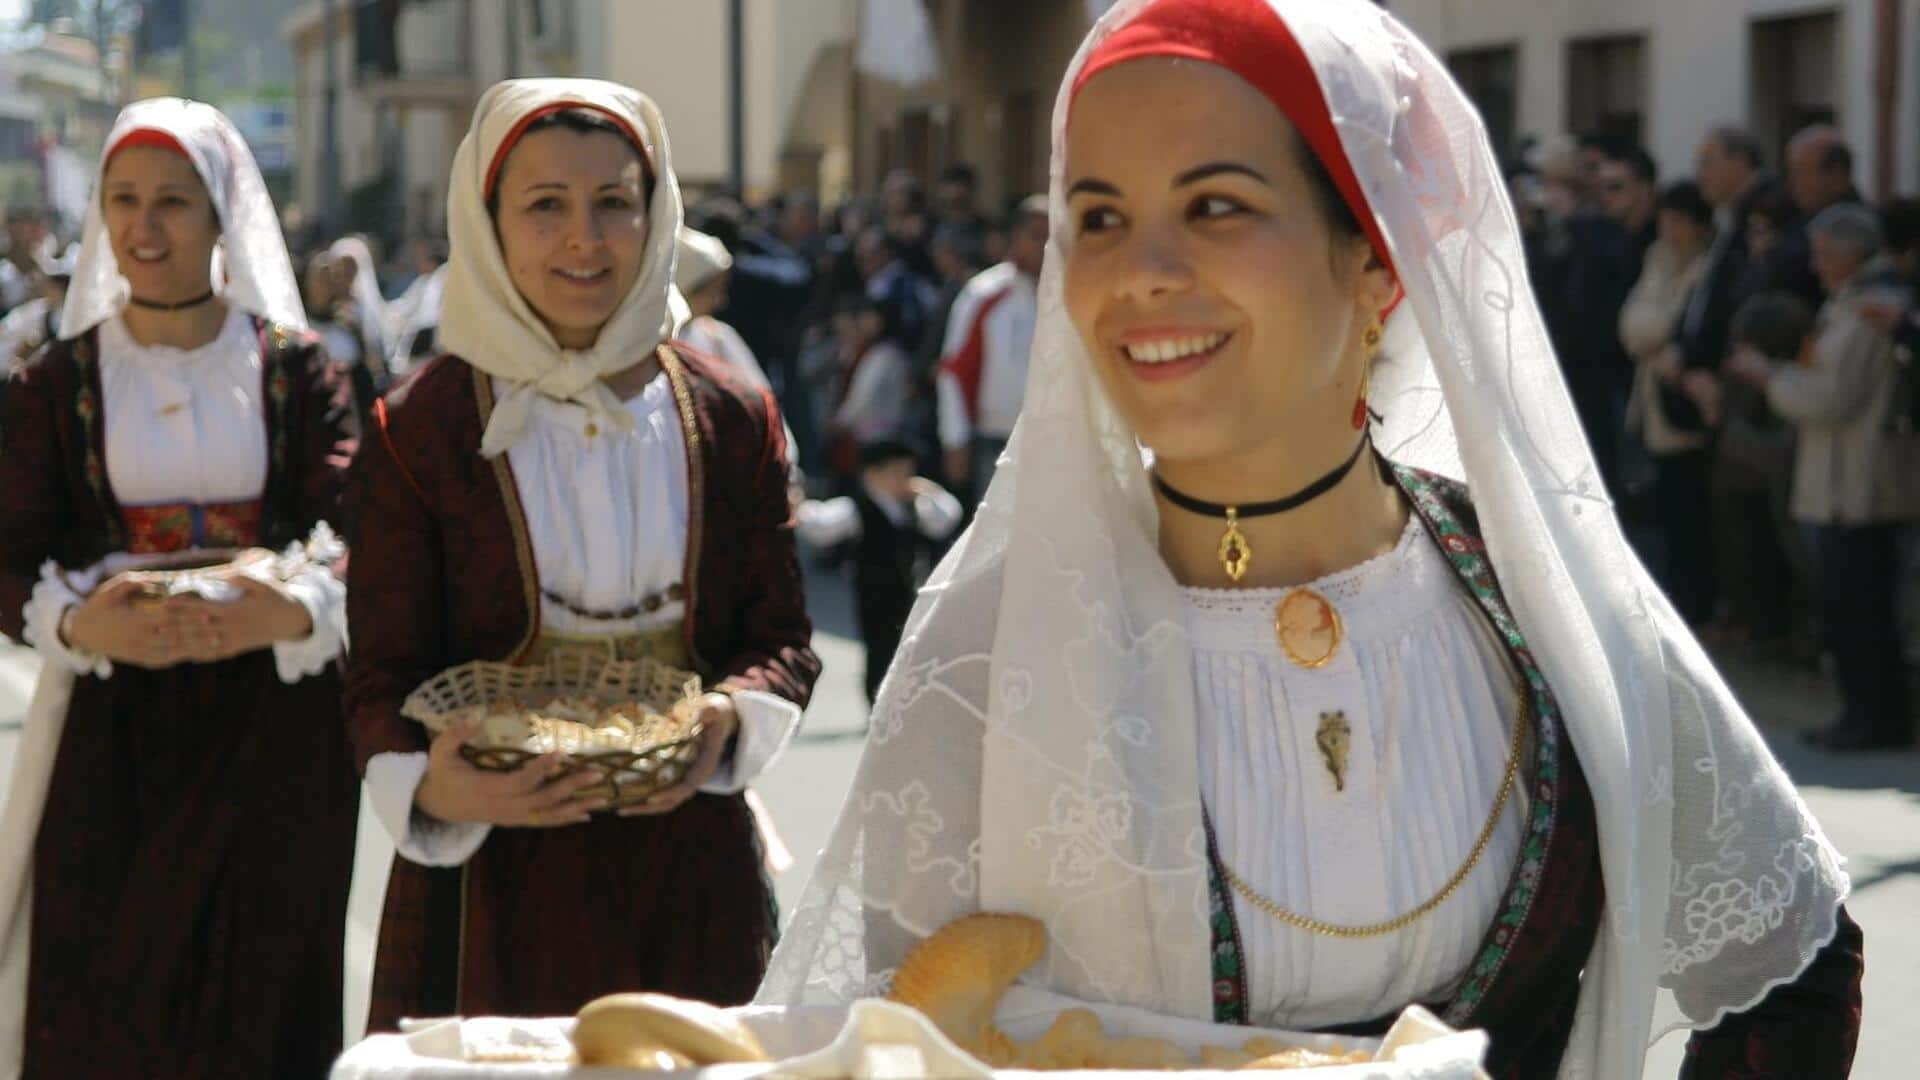 Sardinia's costume heritage explored